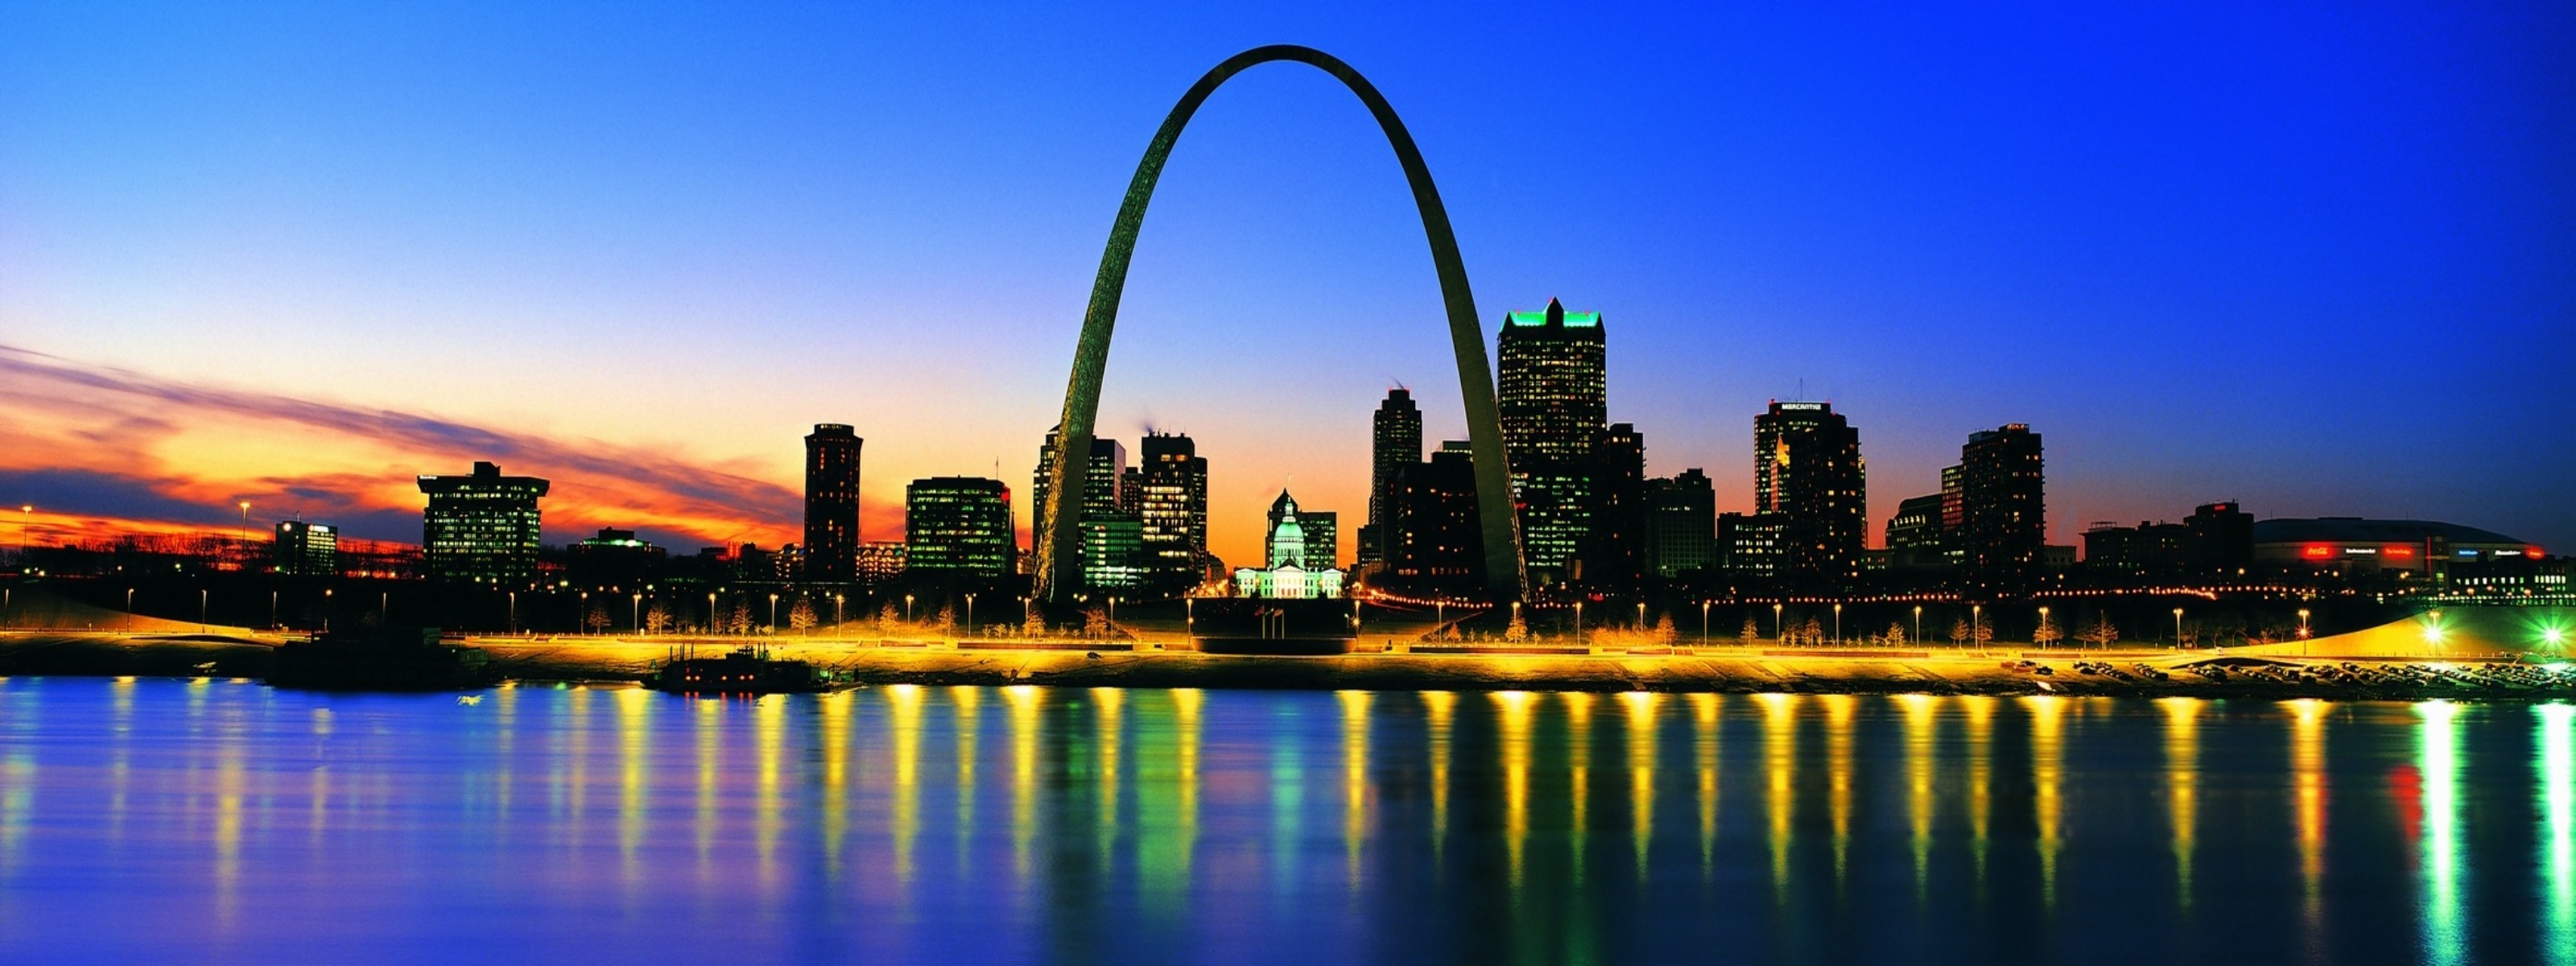 HD St Louis Wallpaper